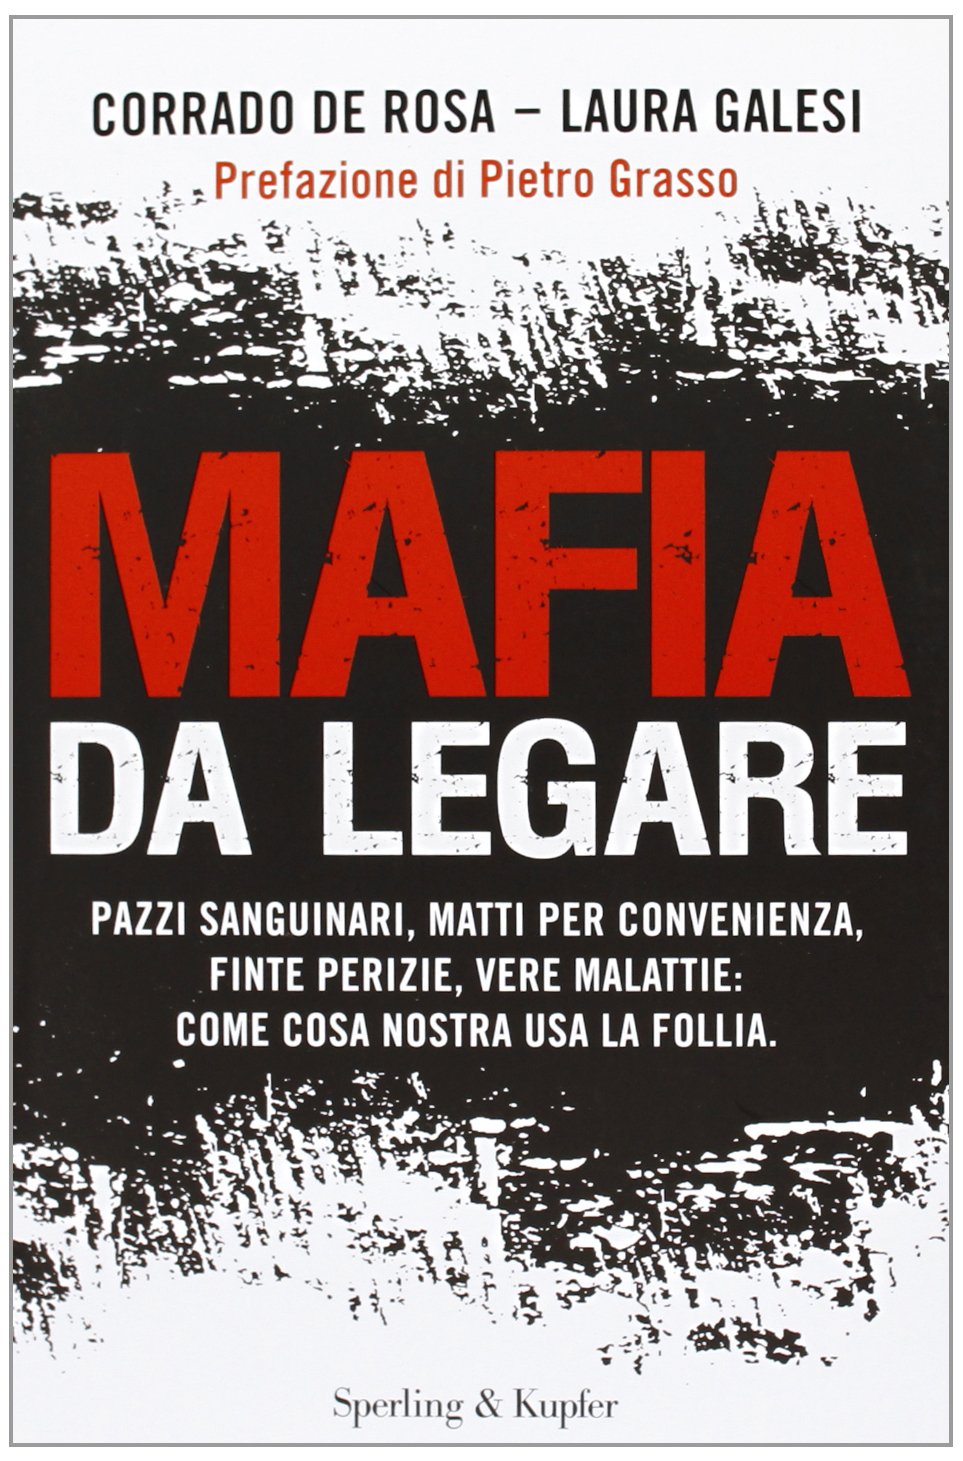 Mafia da legare (Italian language, 2013, Sperling & Kupfer)